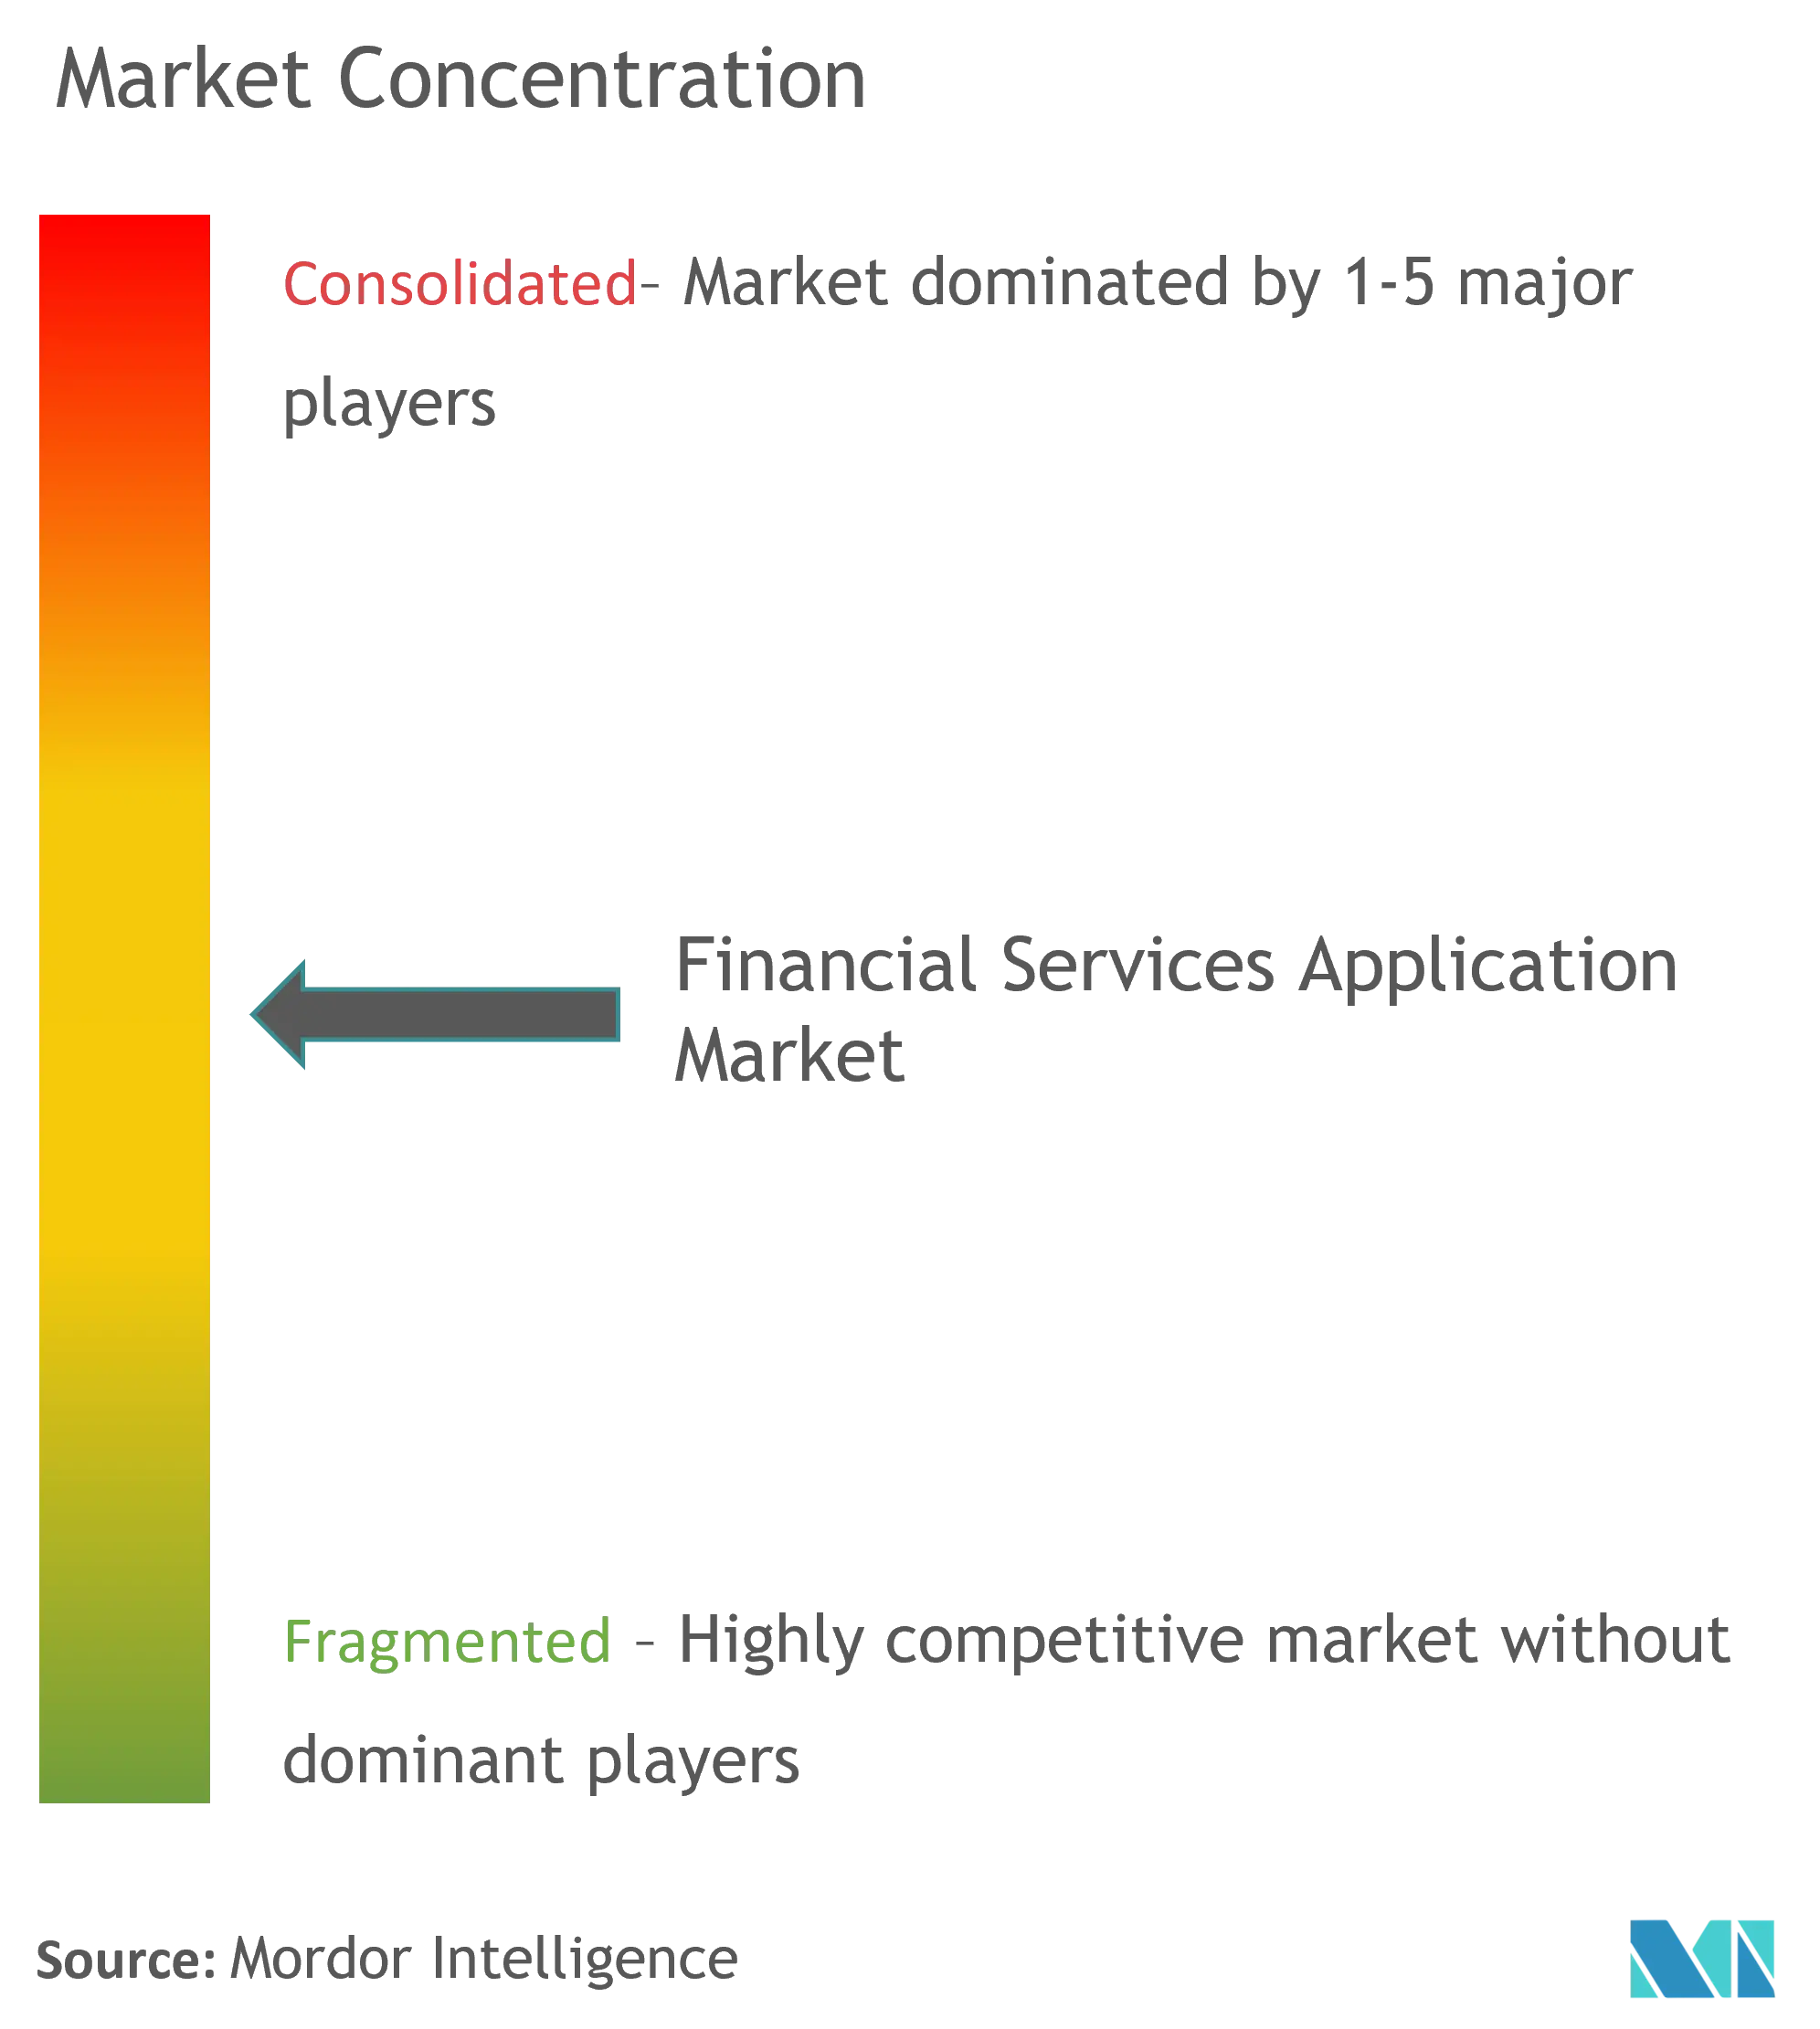 Financial Services Application Market - Market Concentration.png